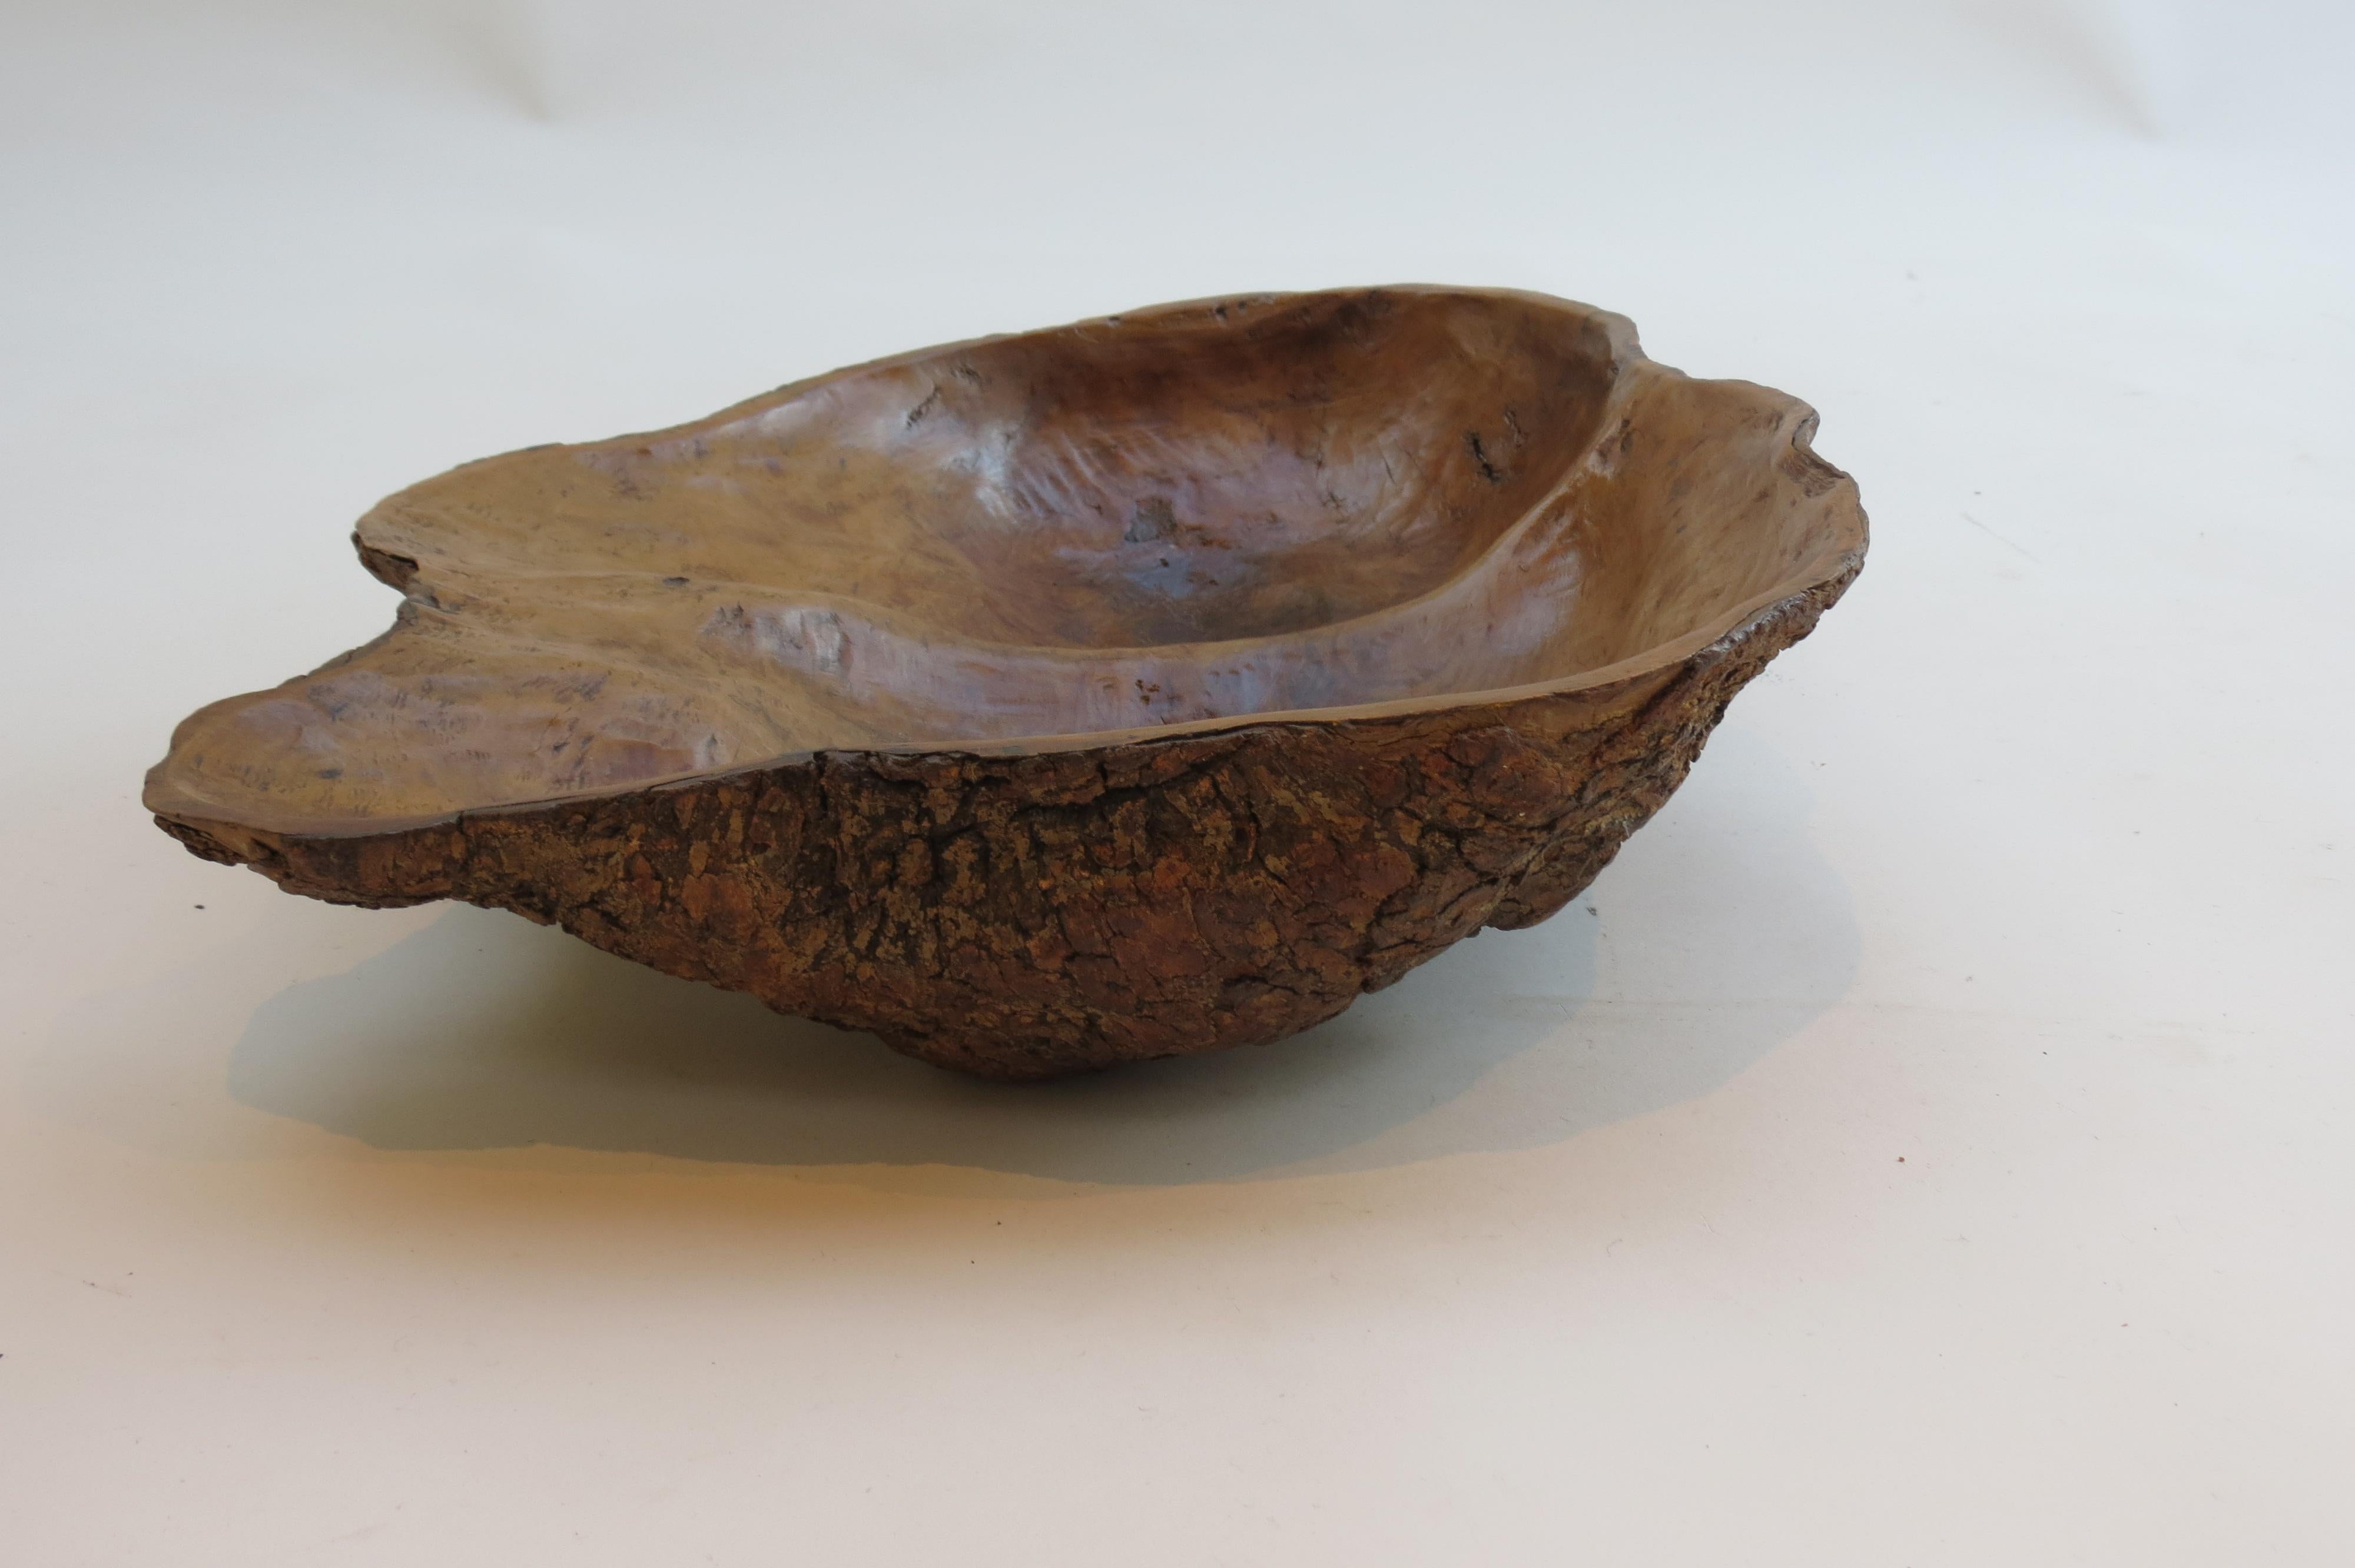 1970s Wooden Bowl Made from Olive Wood (Ende des 20. Jahrhunderts)